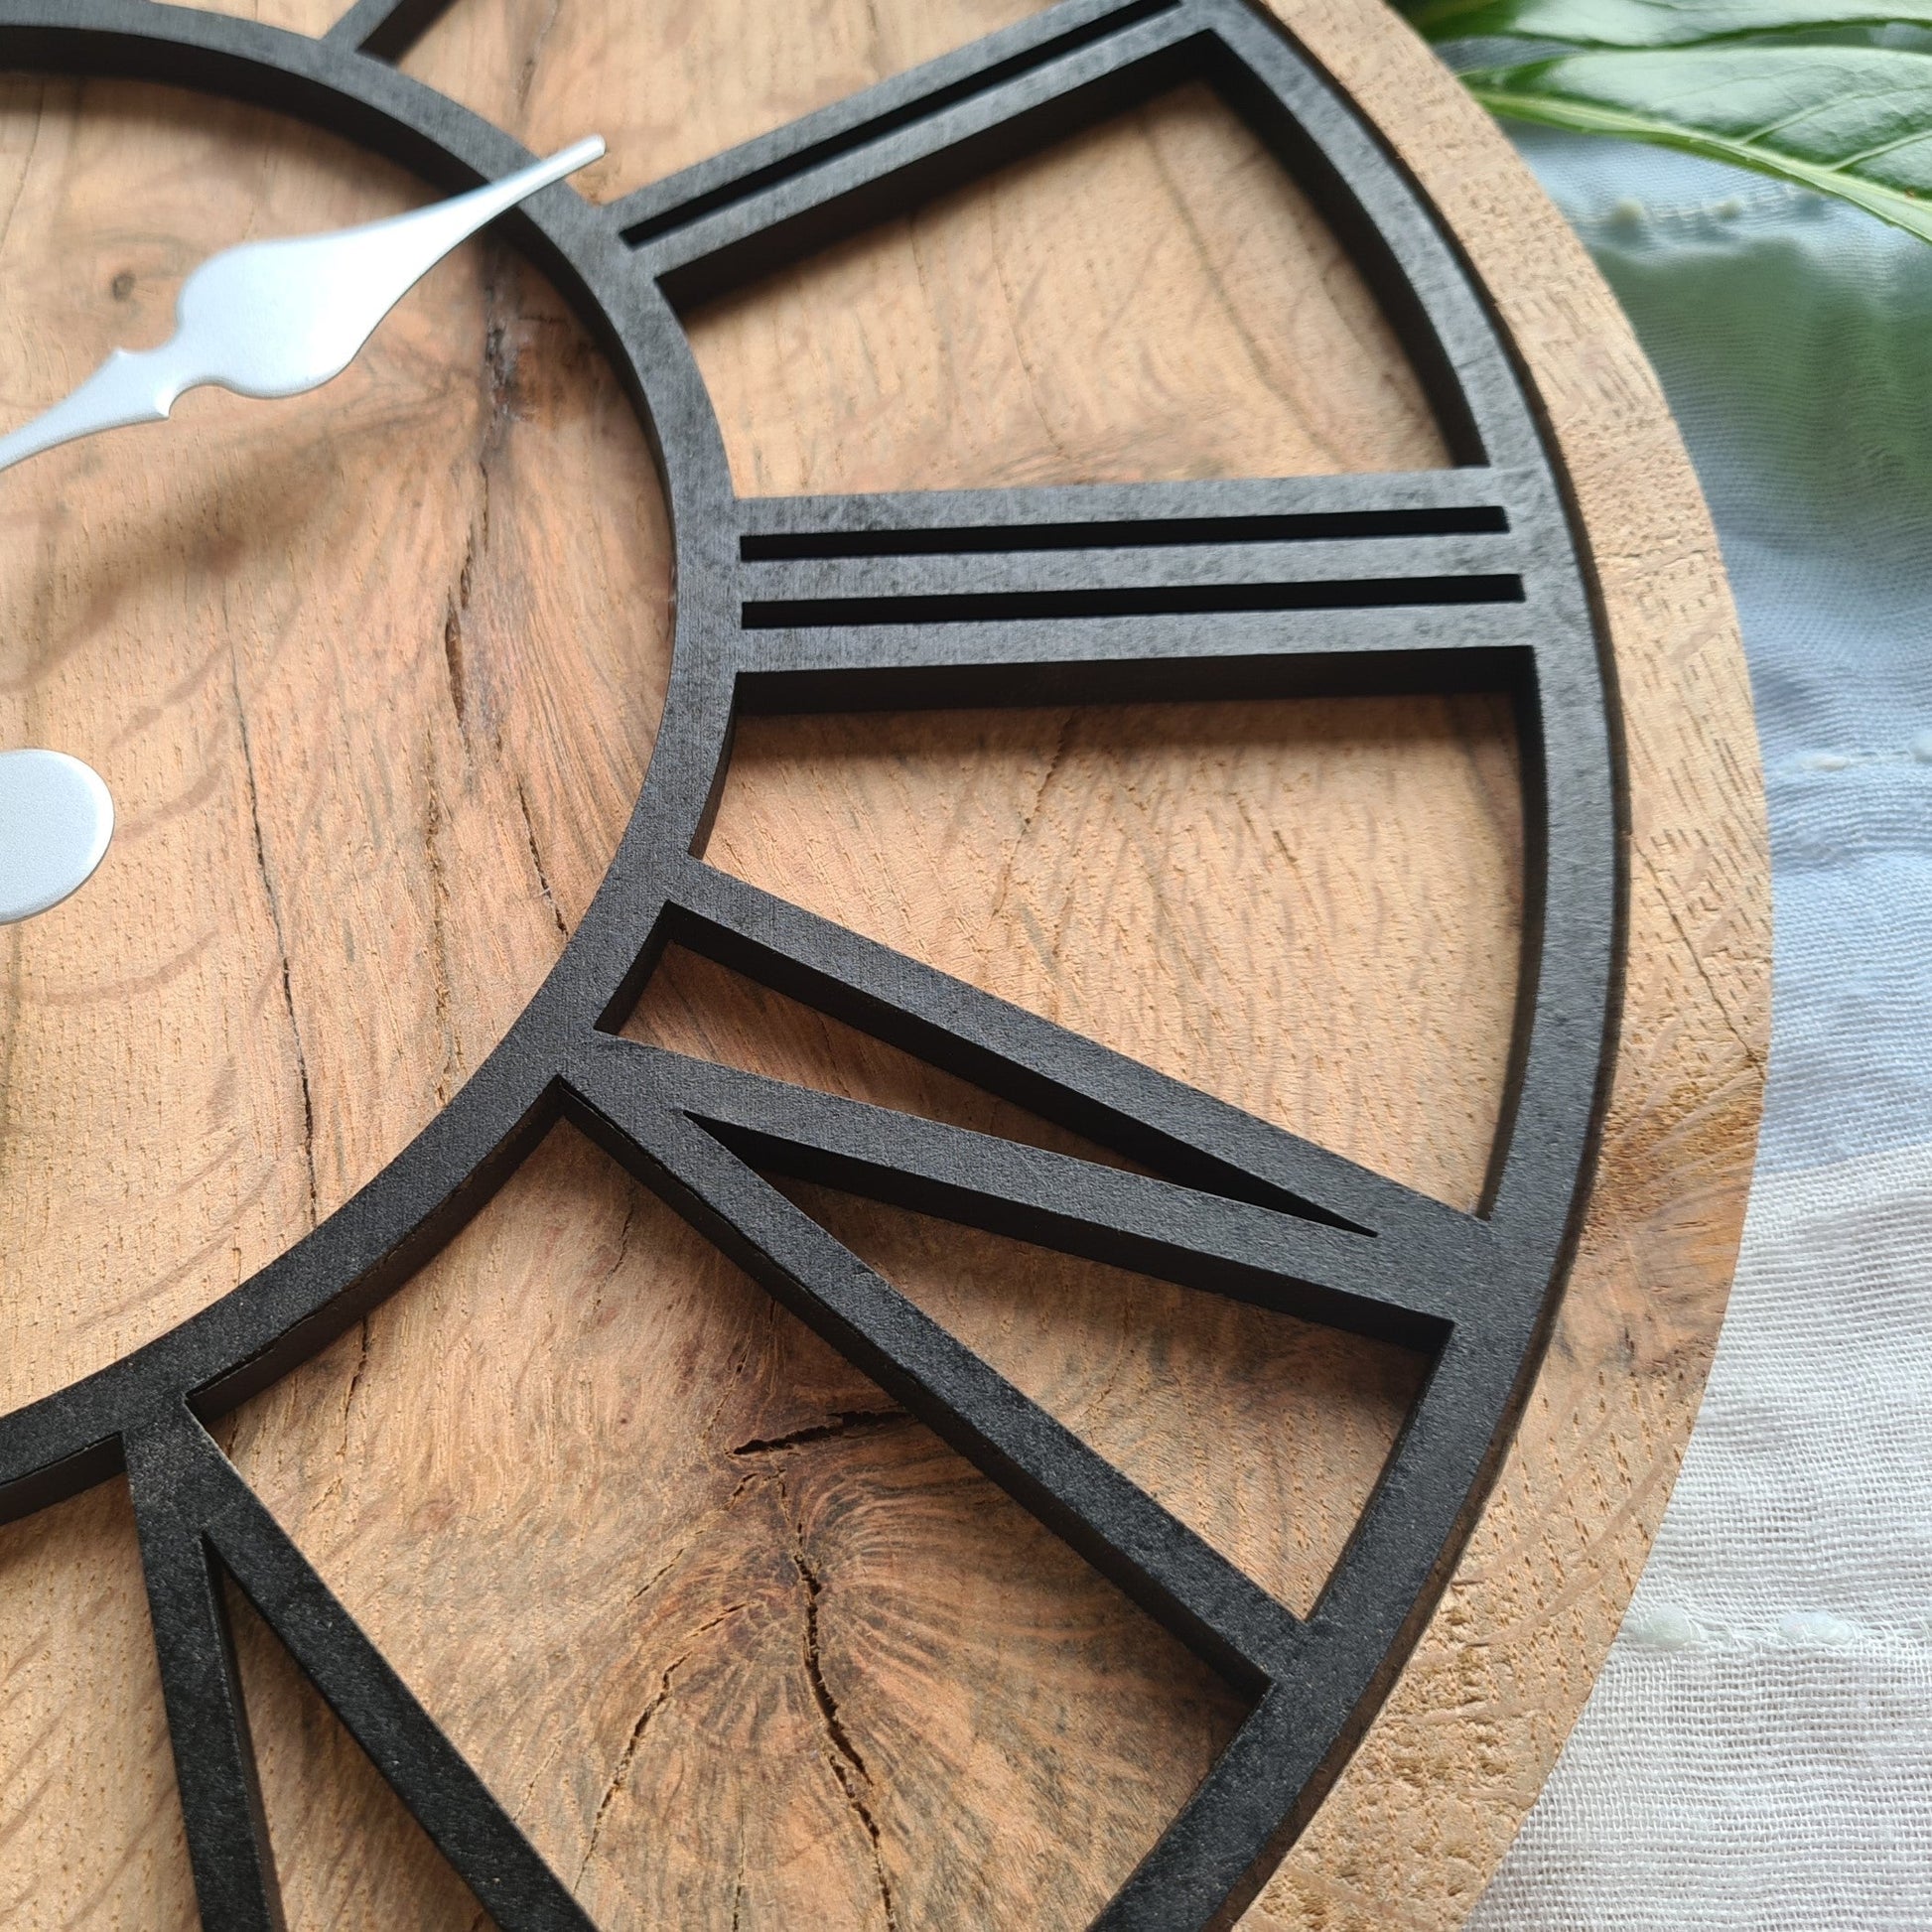 ClockDesignCo 100% Solid Oak Wood Wall Clock | Round Black Skeleton Clock | Rustic Clock